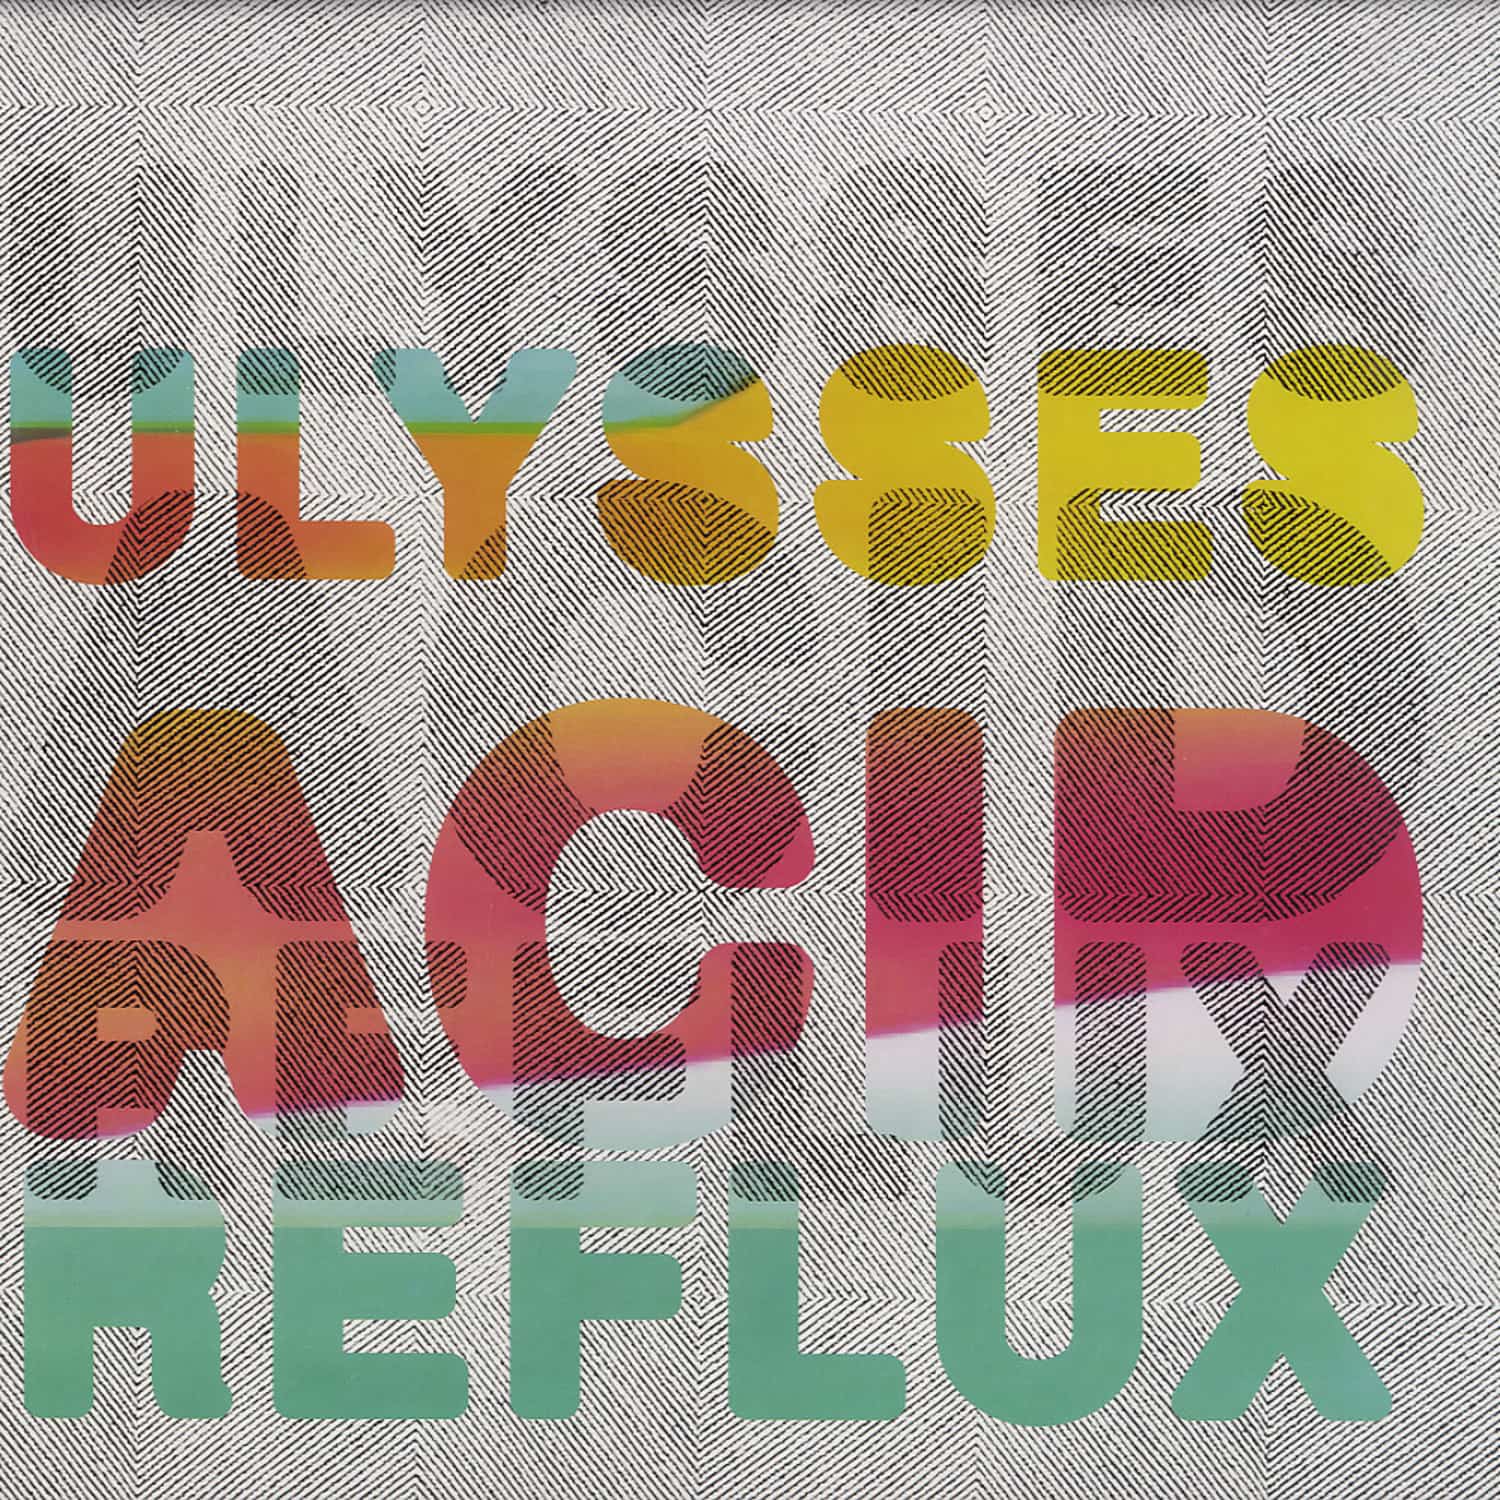 Ulysses - ACID REFLUX